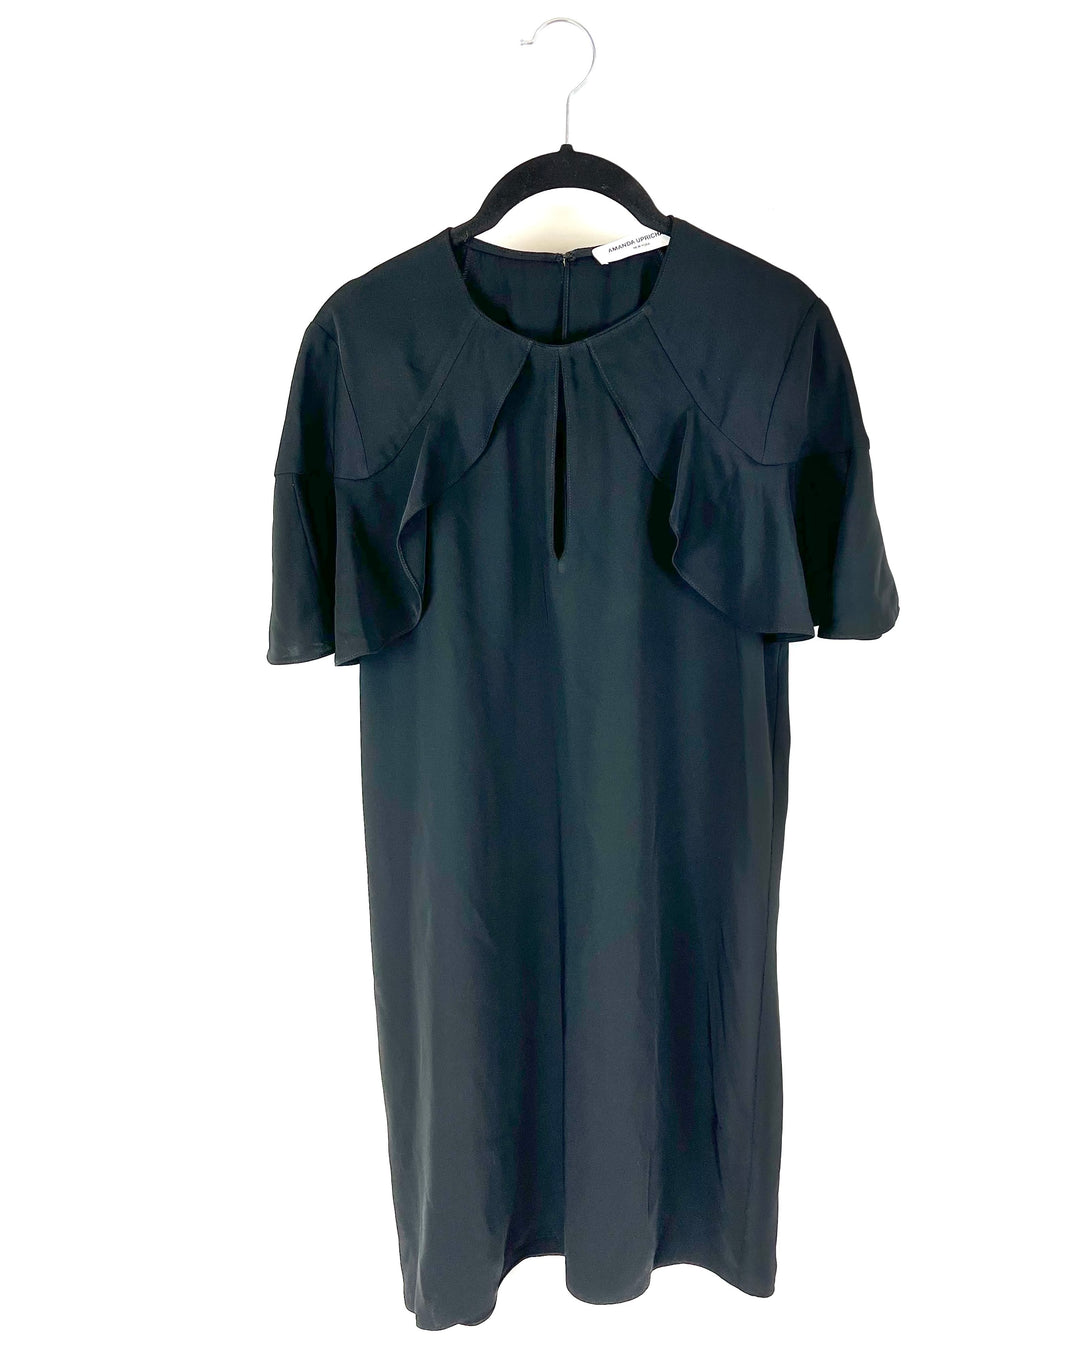 Black Keyhole Dress - Size 4-6